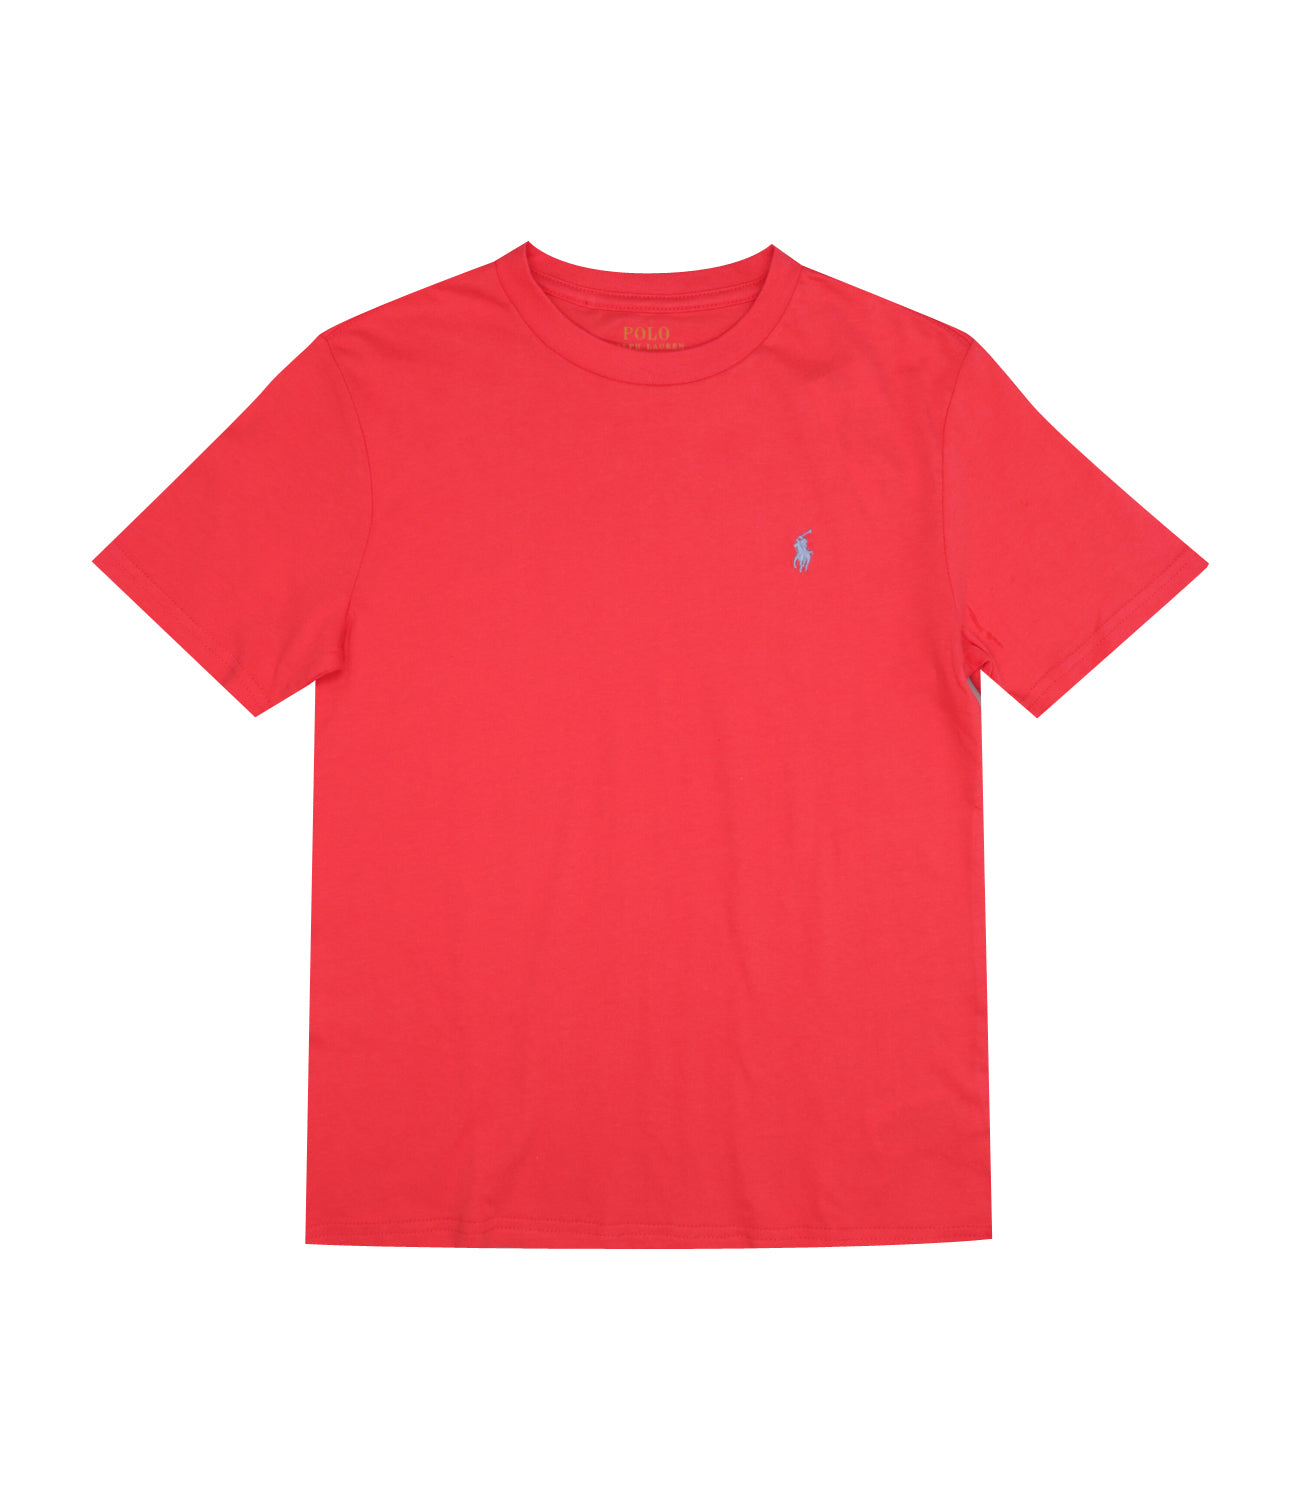 Ralph Lauren Childrenswear |T-Shirt Coral